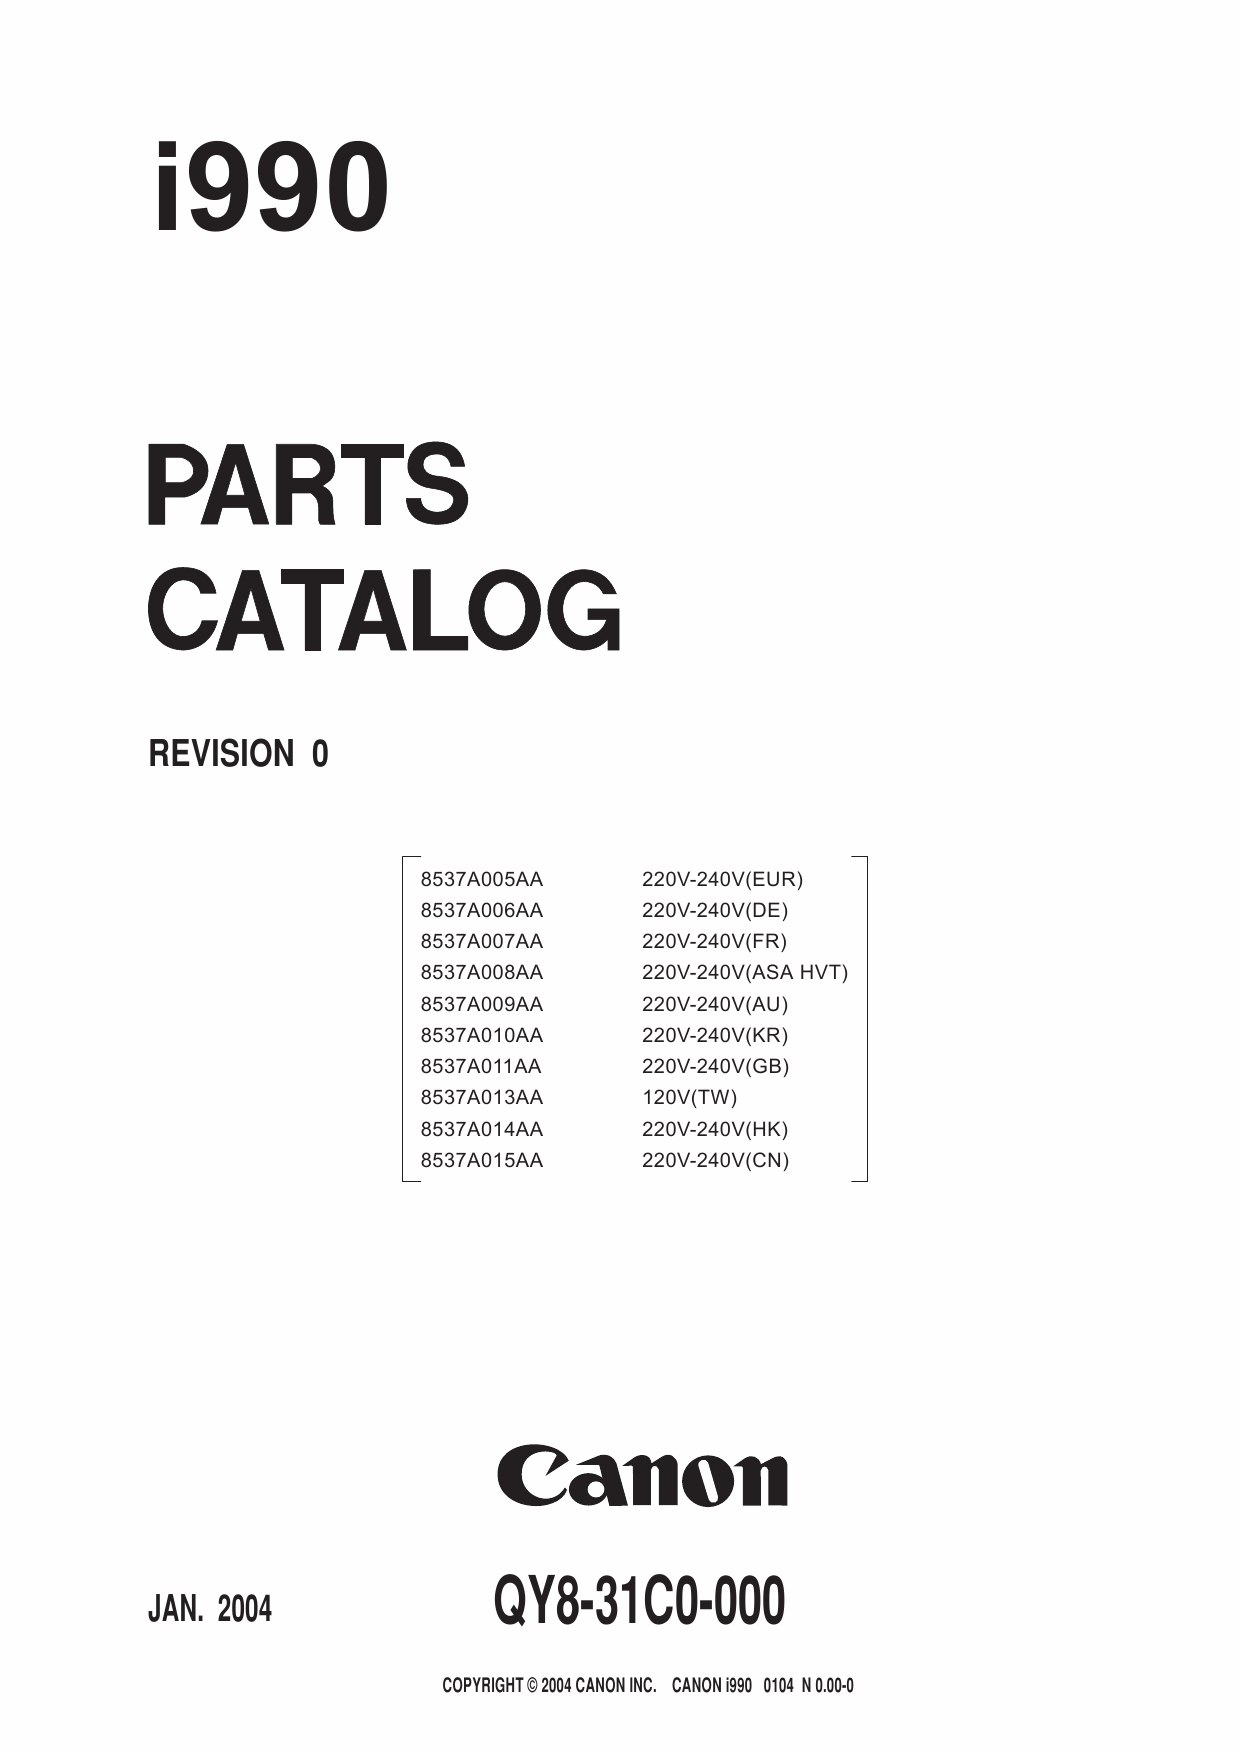 Canon PIXUS i990 Parts Catalog Manual-1